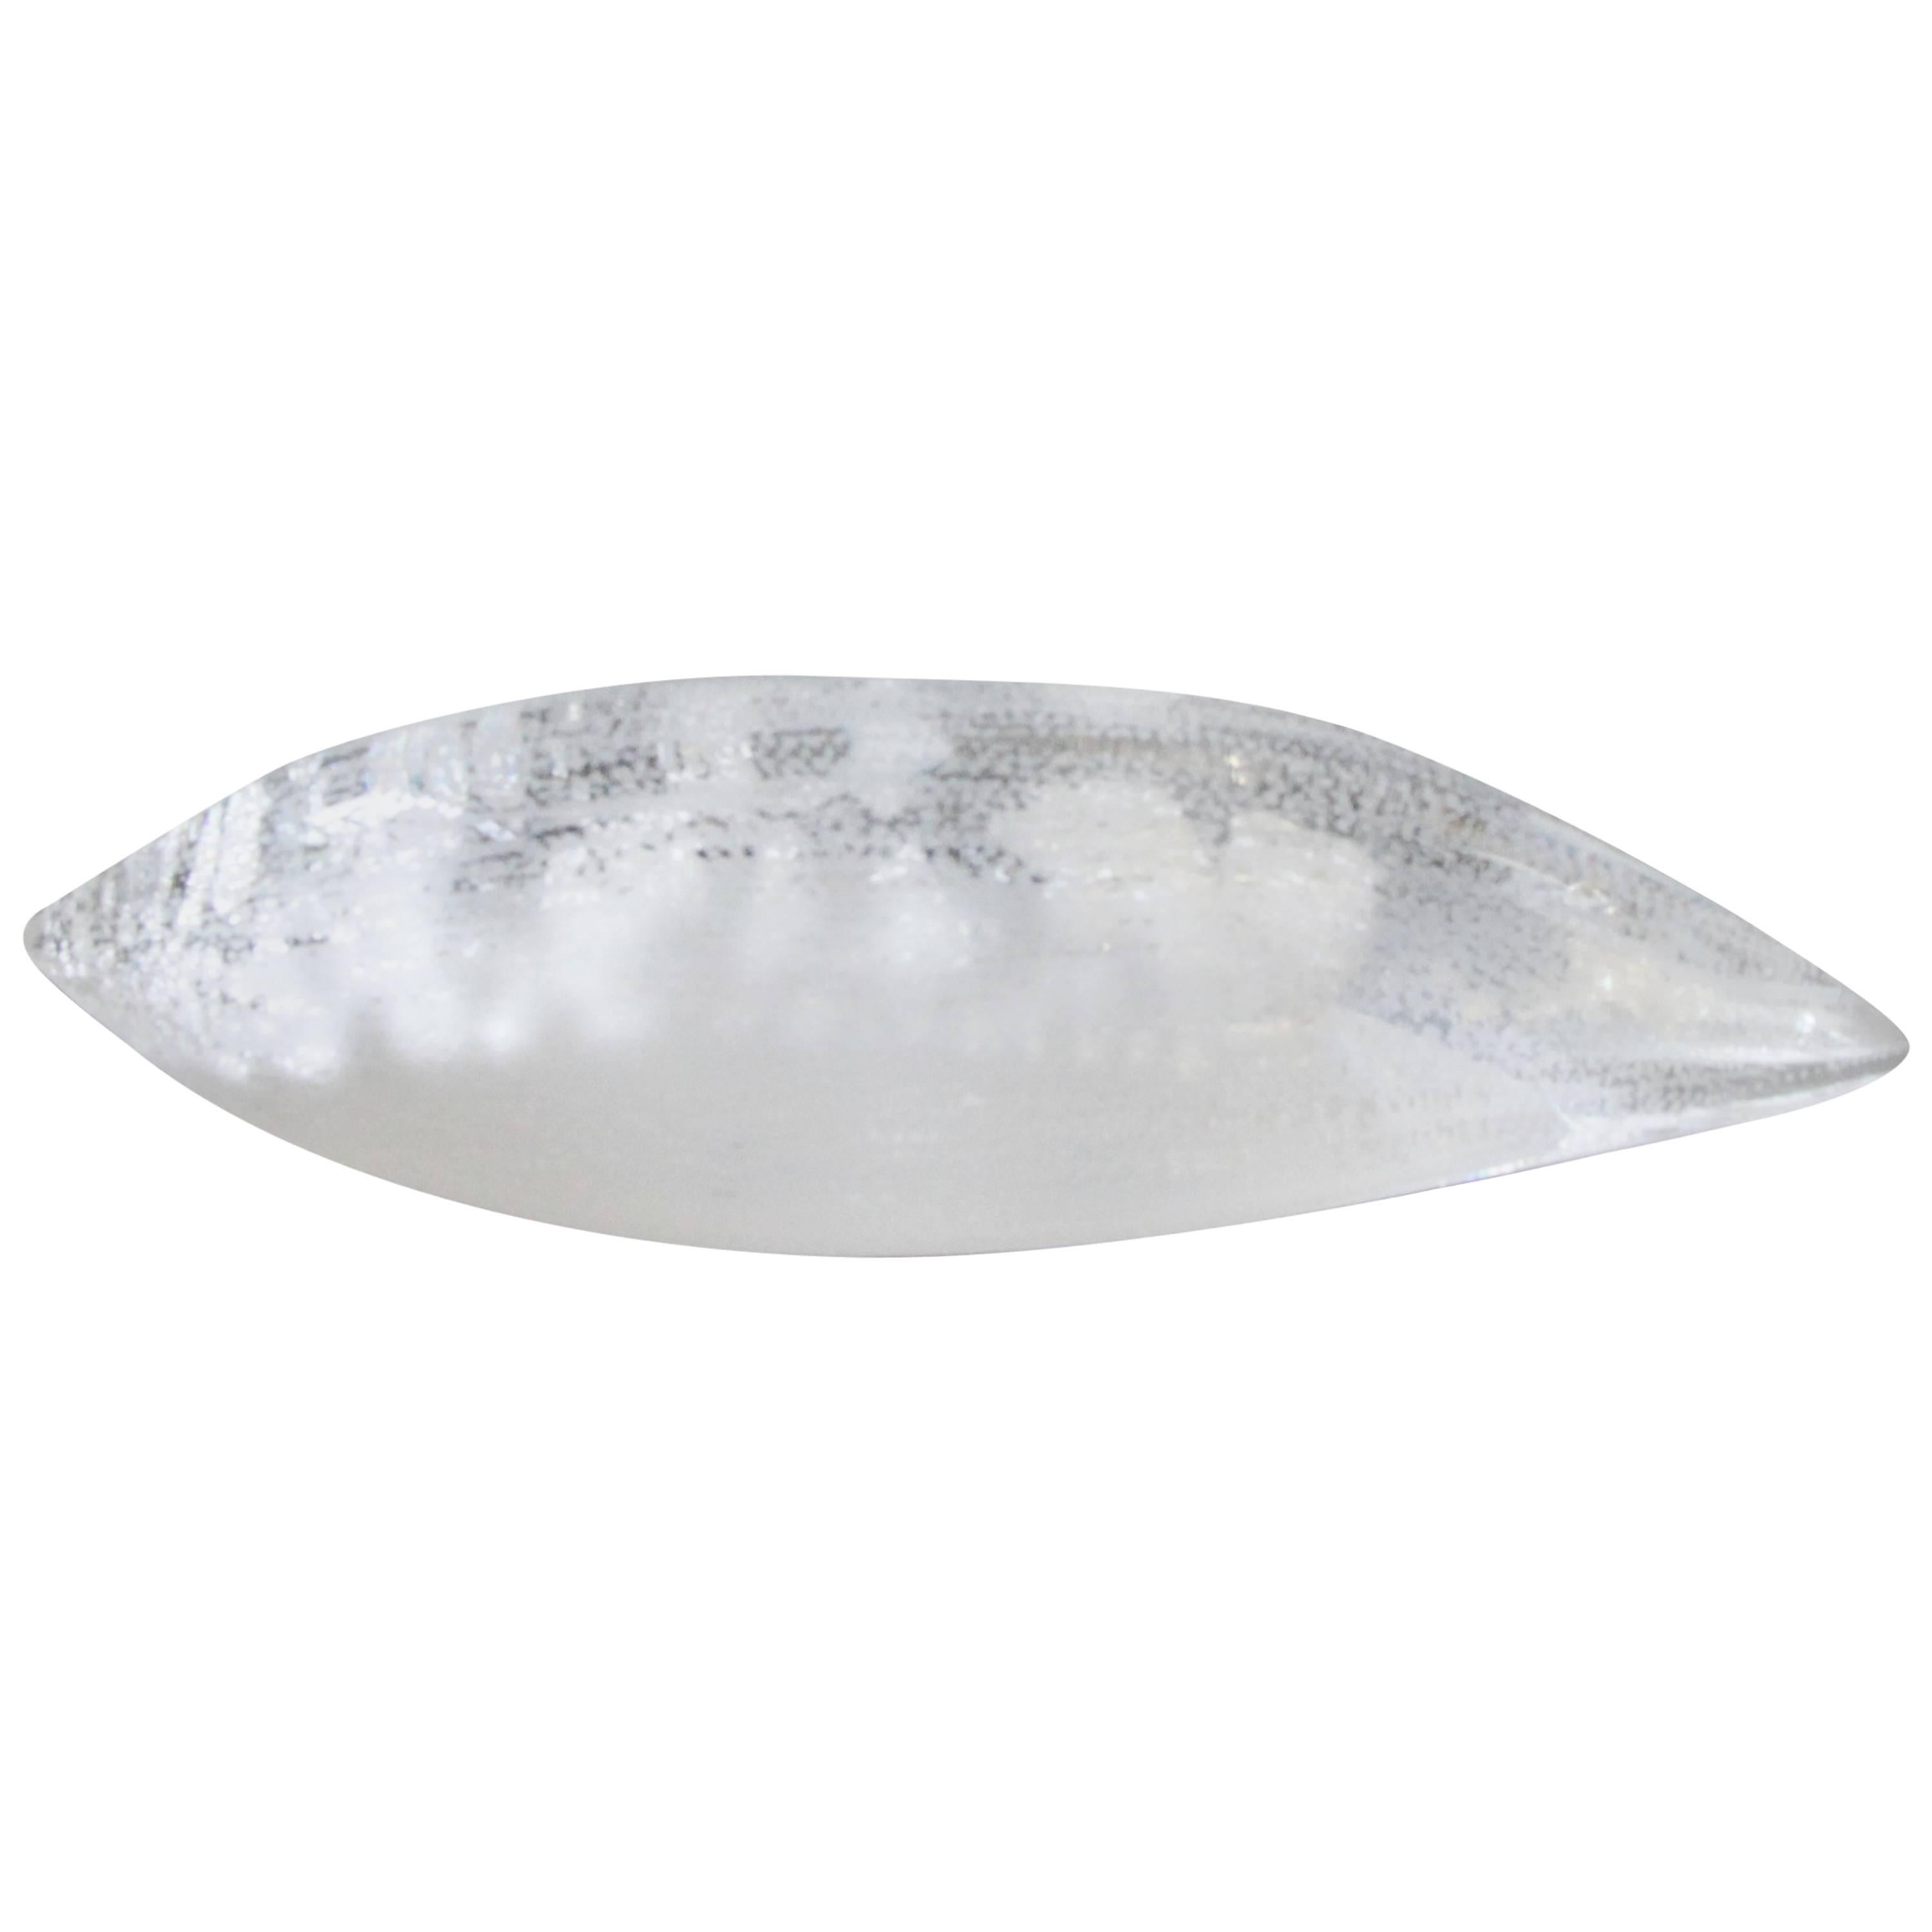 Arioi Glass Art Object DLeuci Studio Contemporary Silver Foil Sculpture For Sale